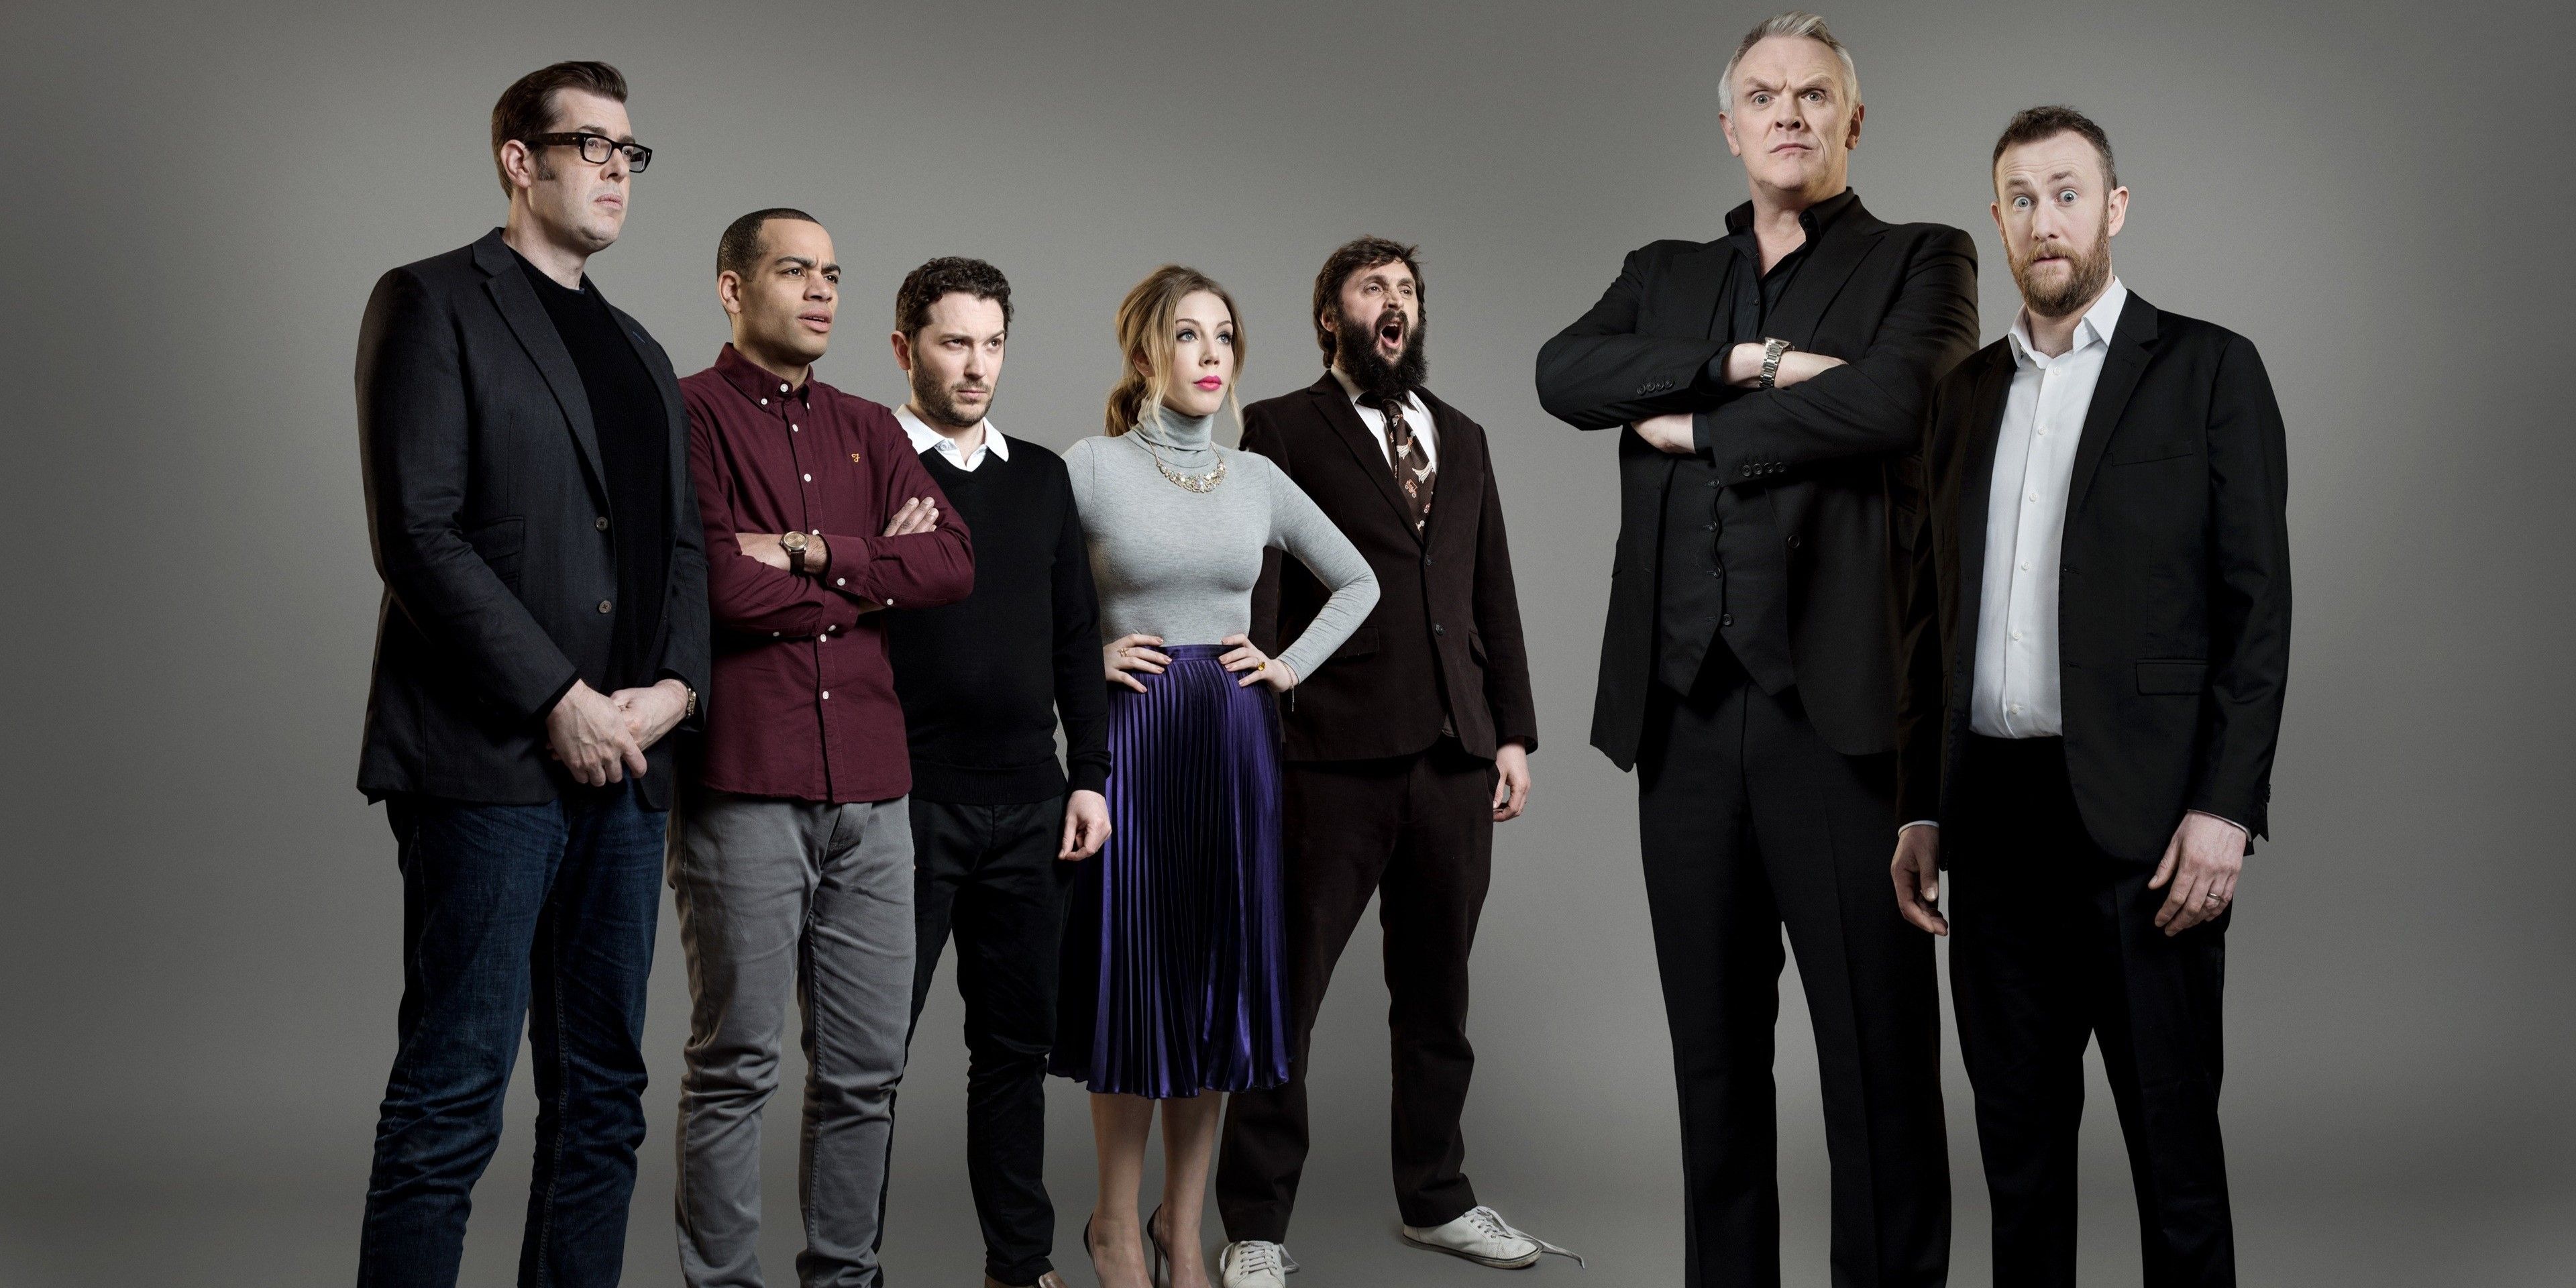 Promo image of Taskmaster season 2's cast.